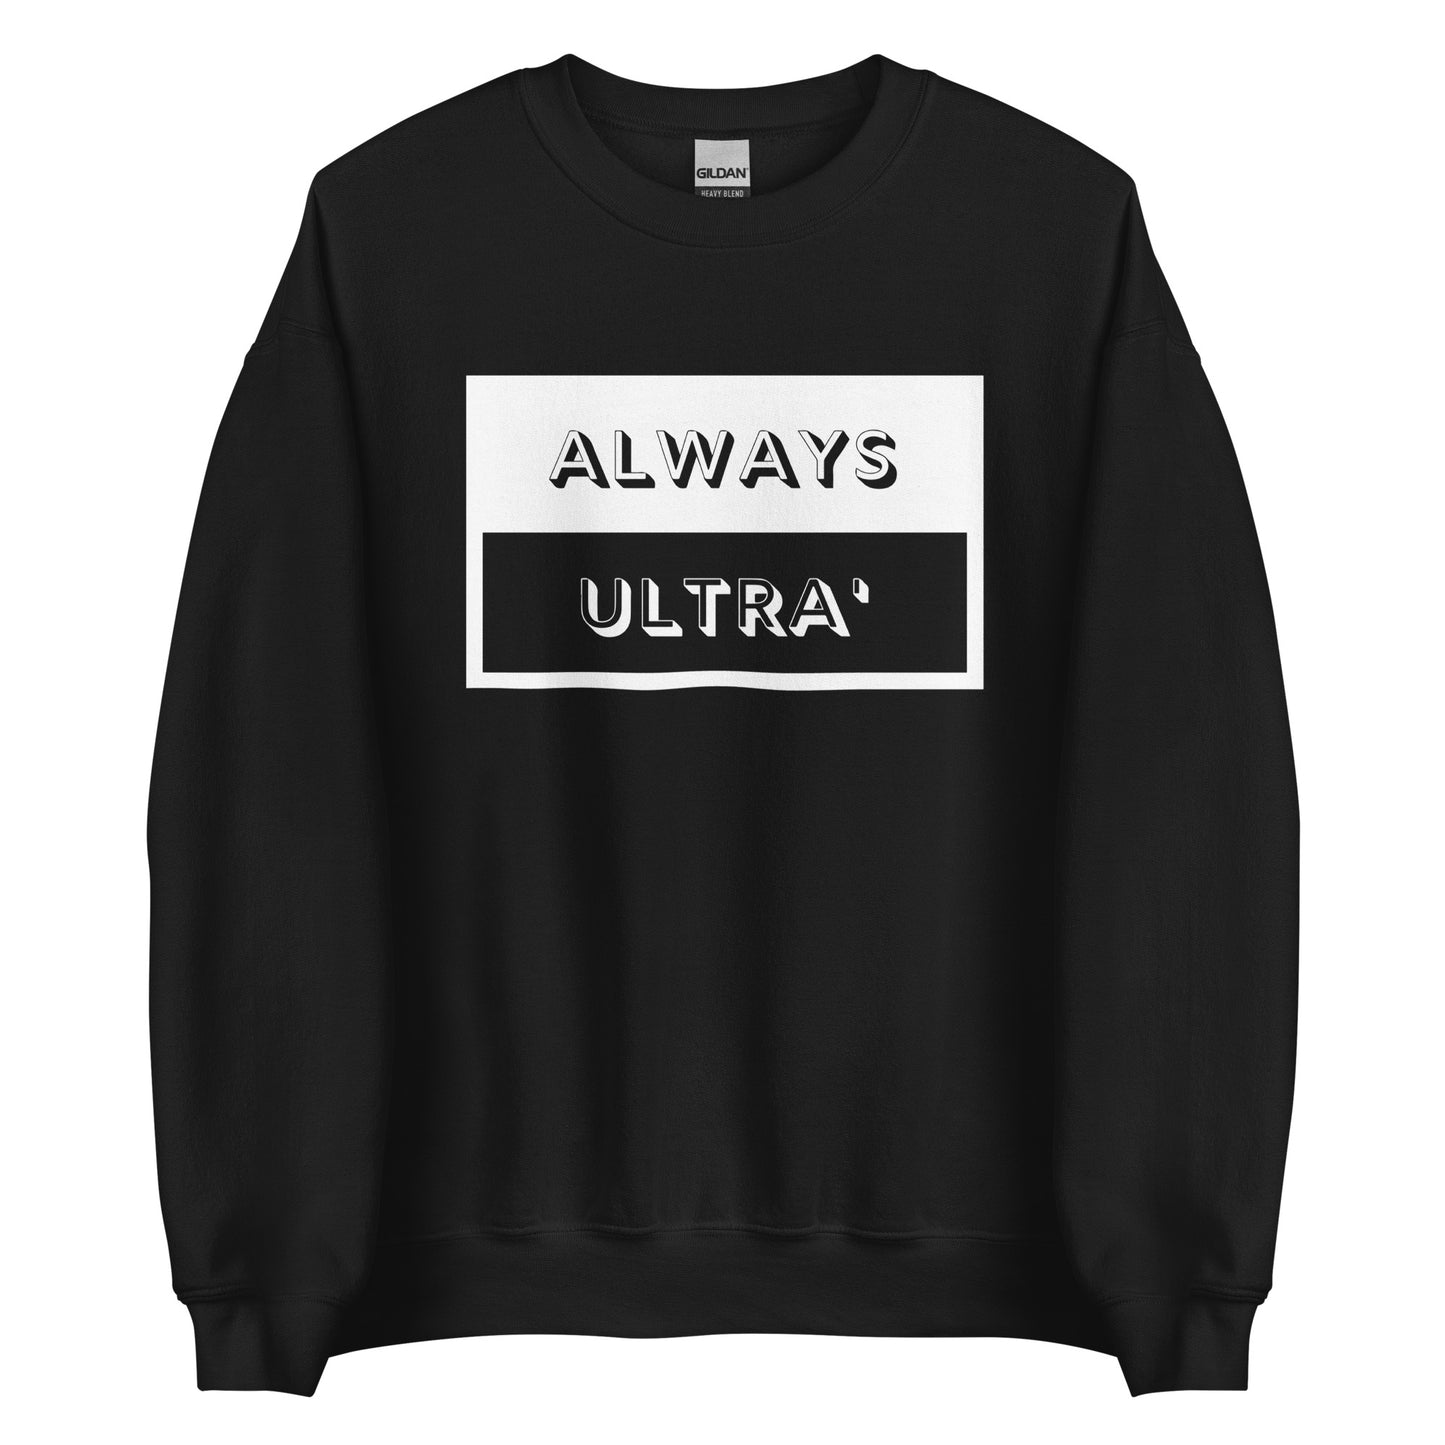 Always Ultra' Sweatshirt